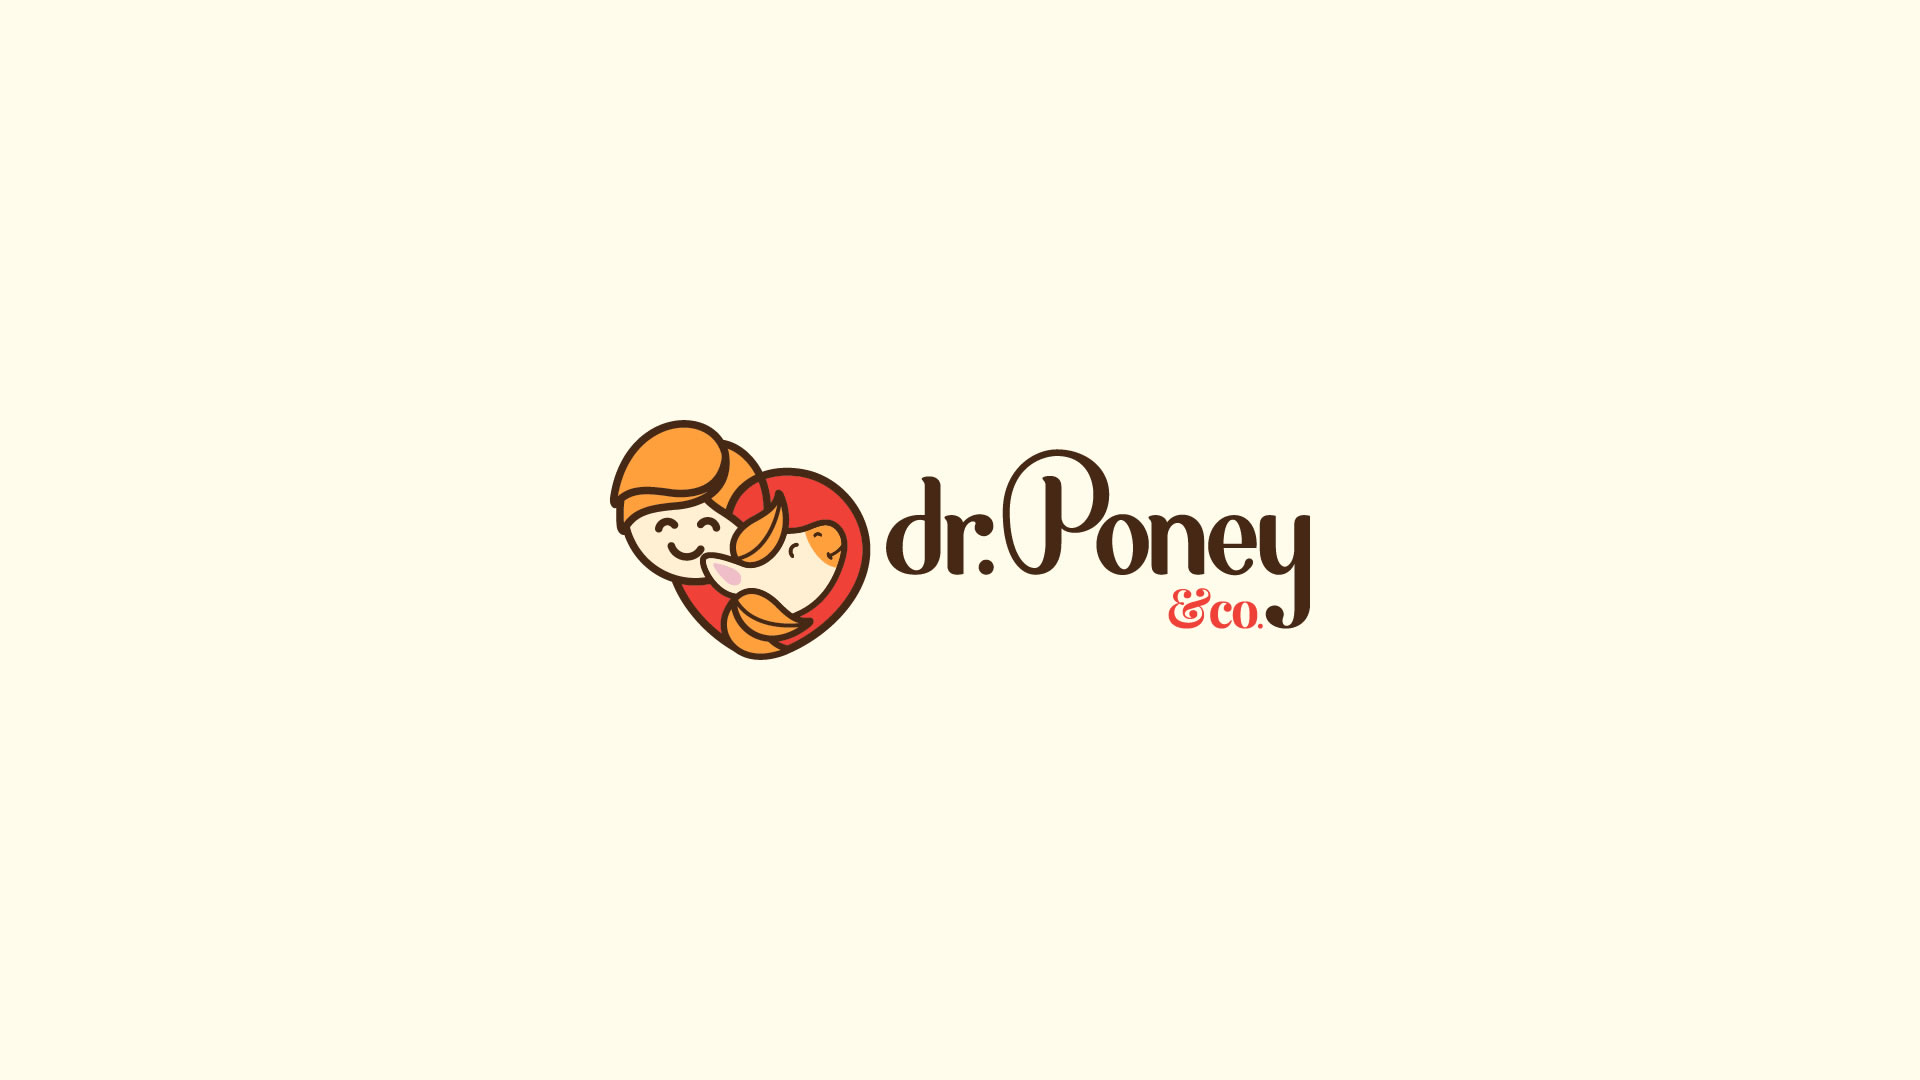 Dr. Poney, Identidade Visual, Agência IH9